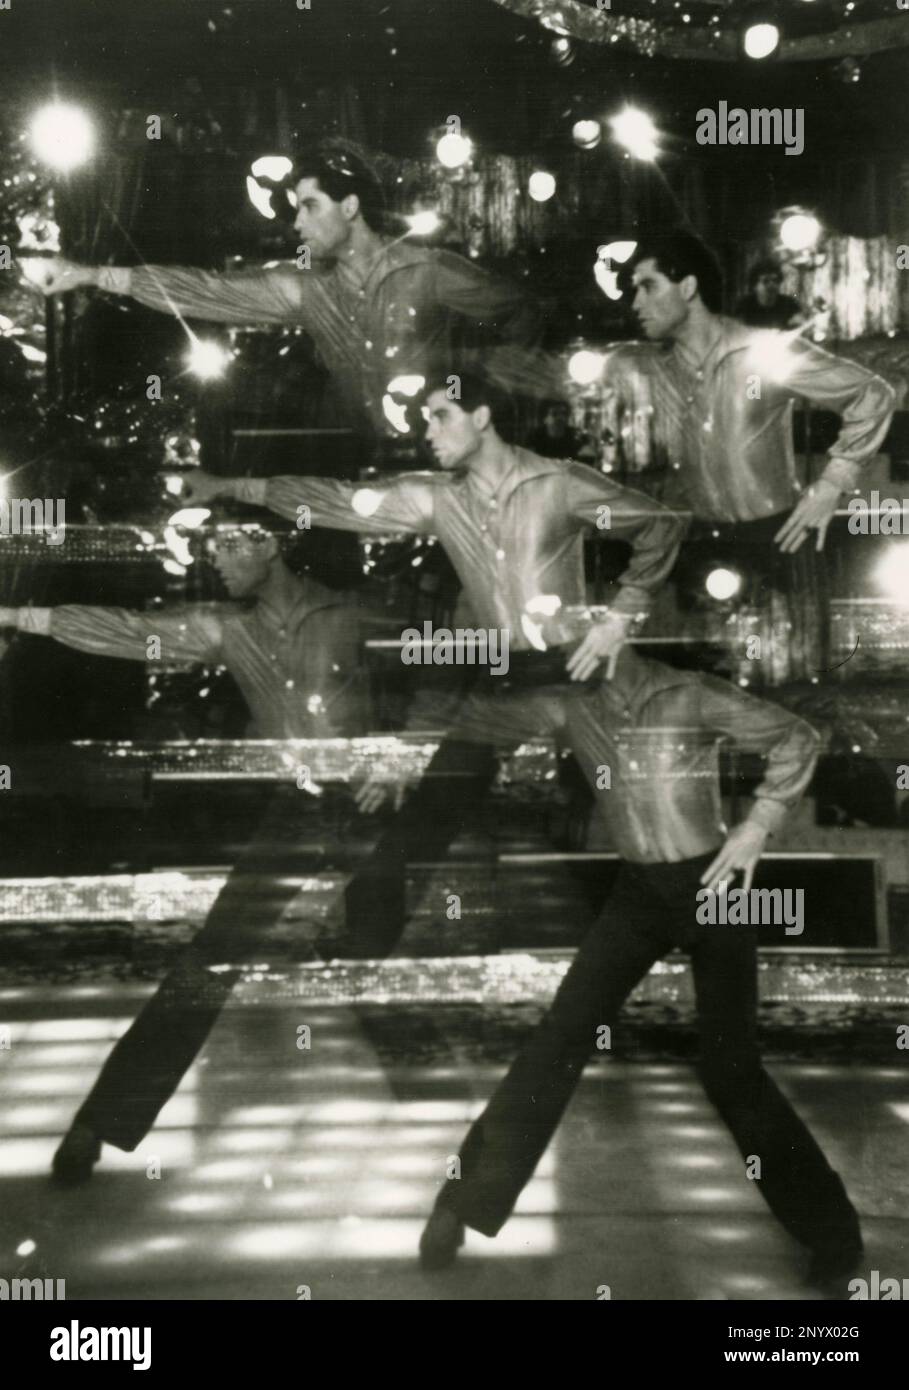 American actor John Travolta in the movie Saturday Night Fever, USA 1977 Stock Photo